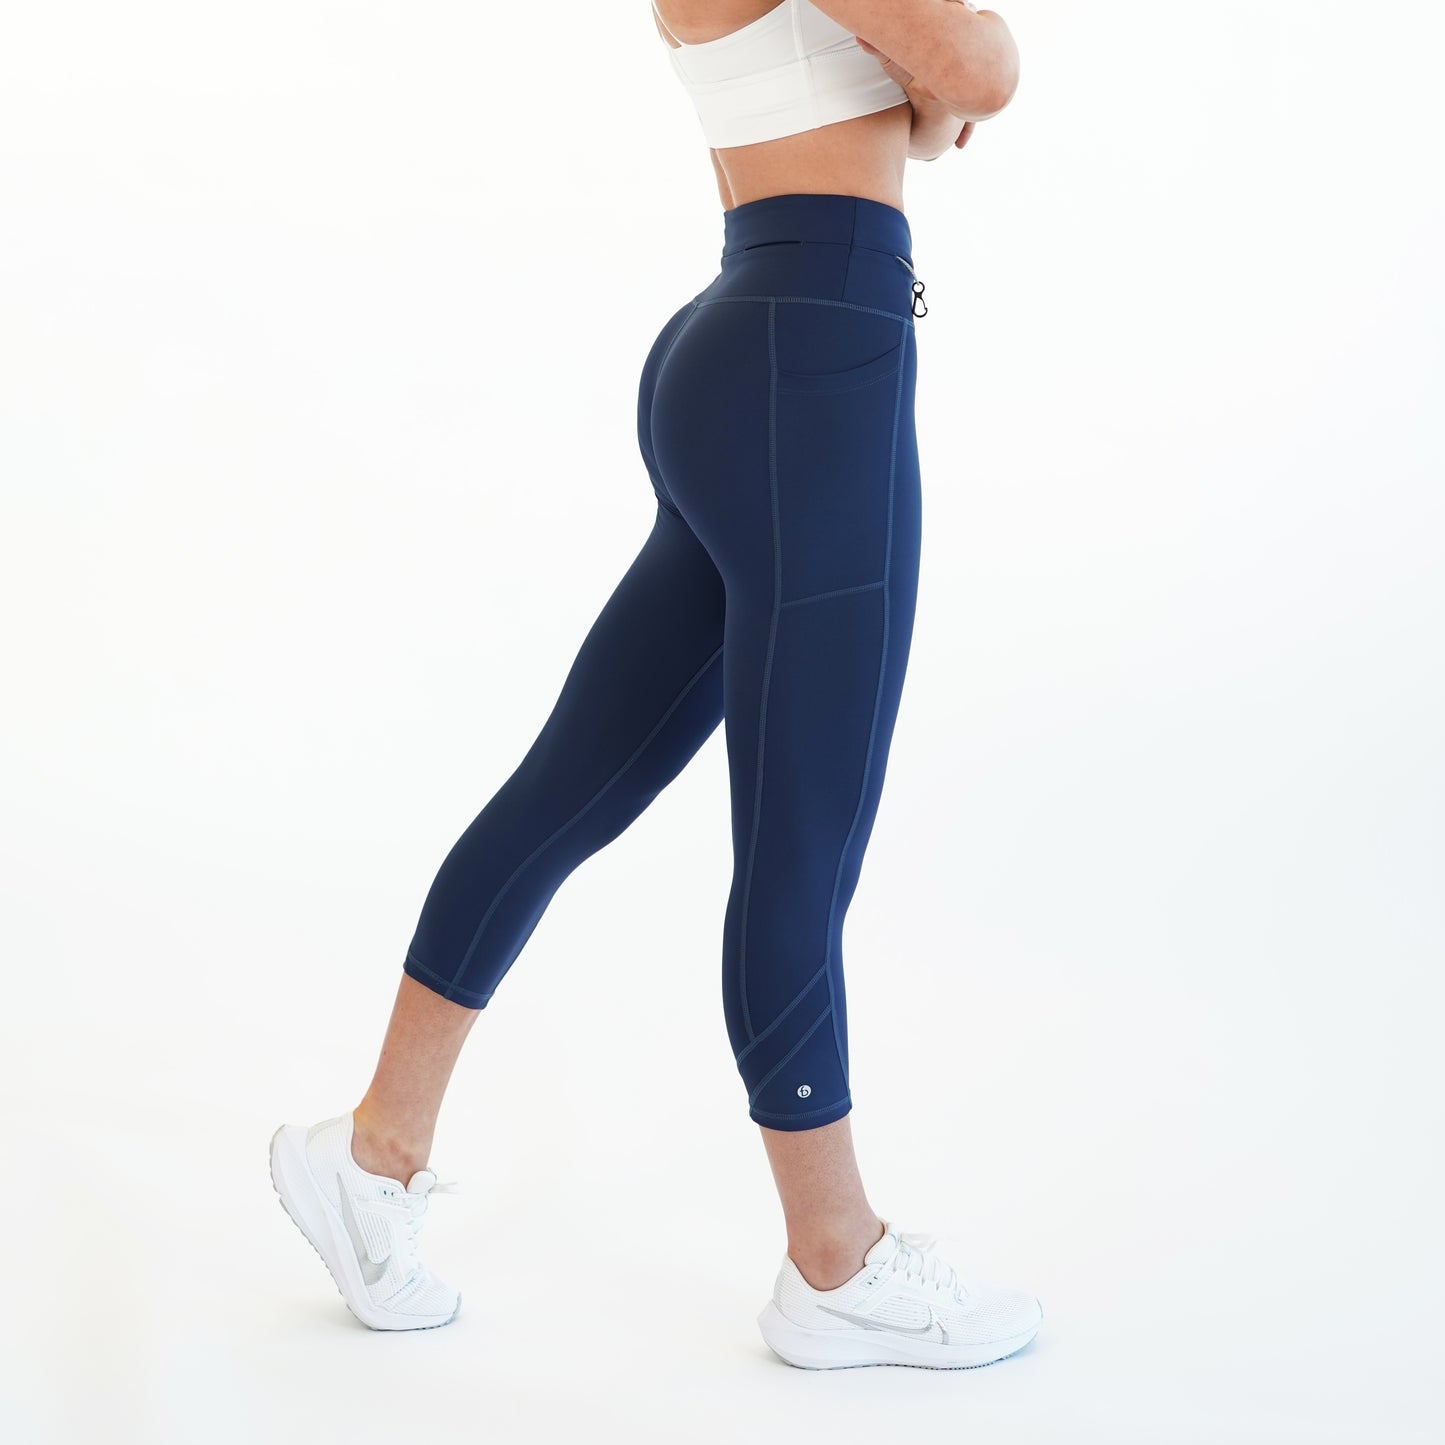 Lululemon Women's Crop Leggings Yoga Athletic Side Pockets Size 14